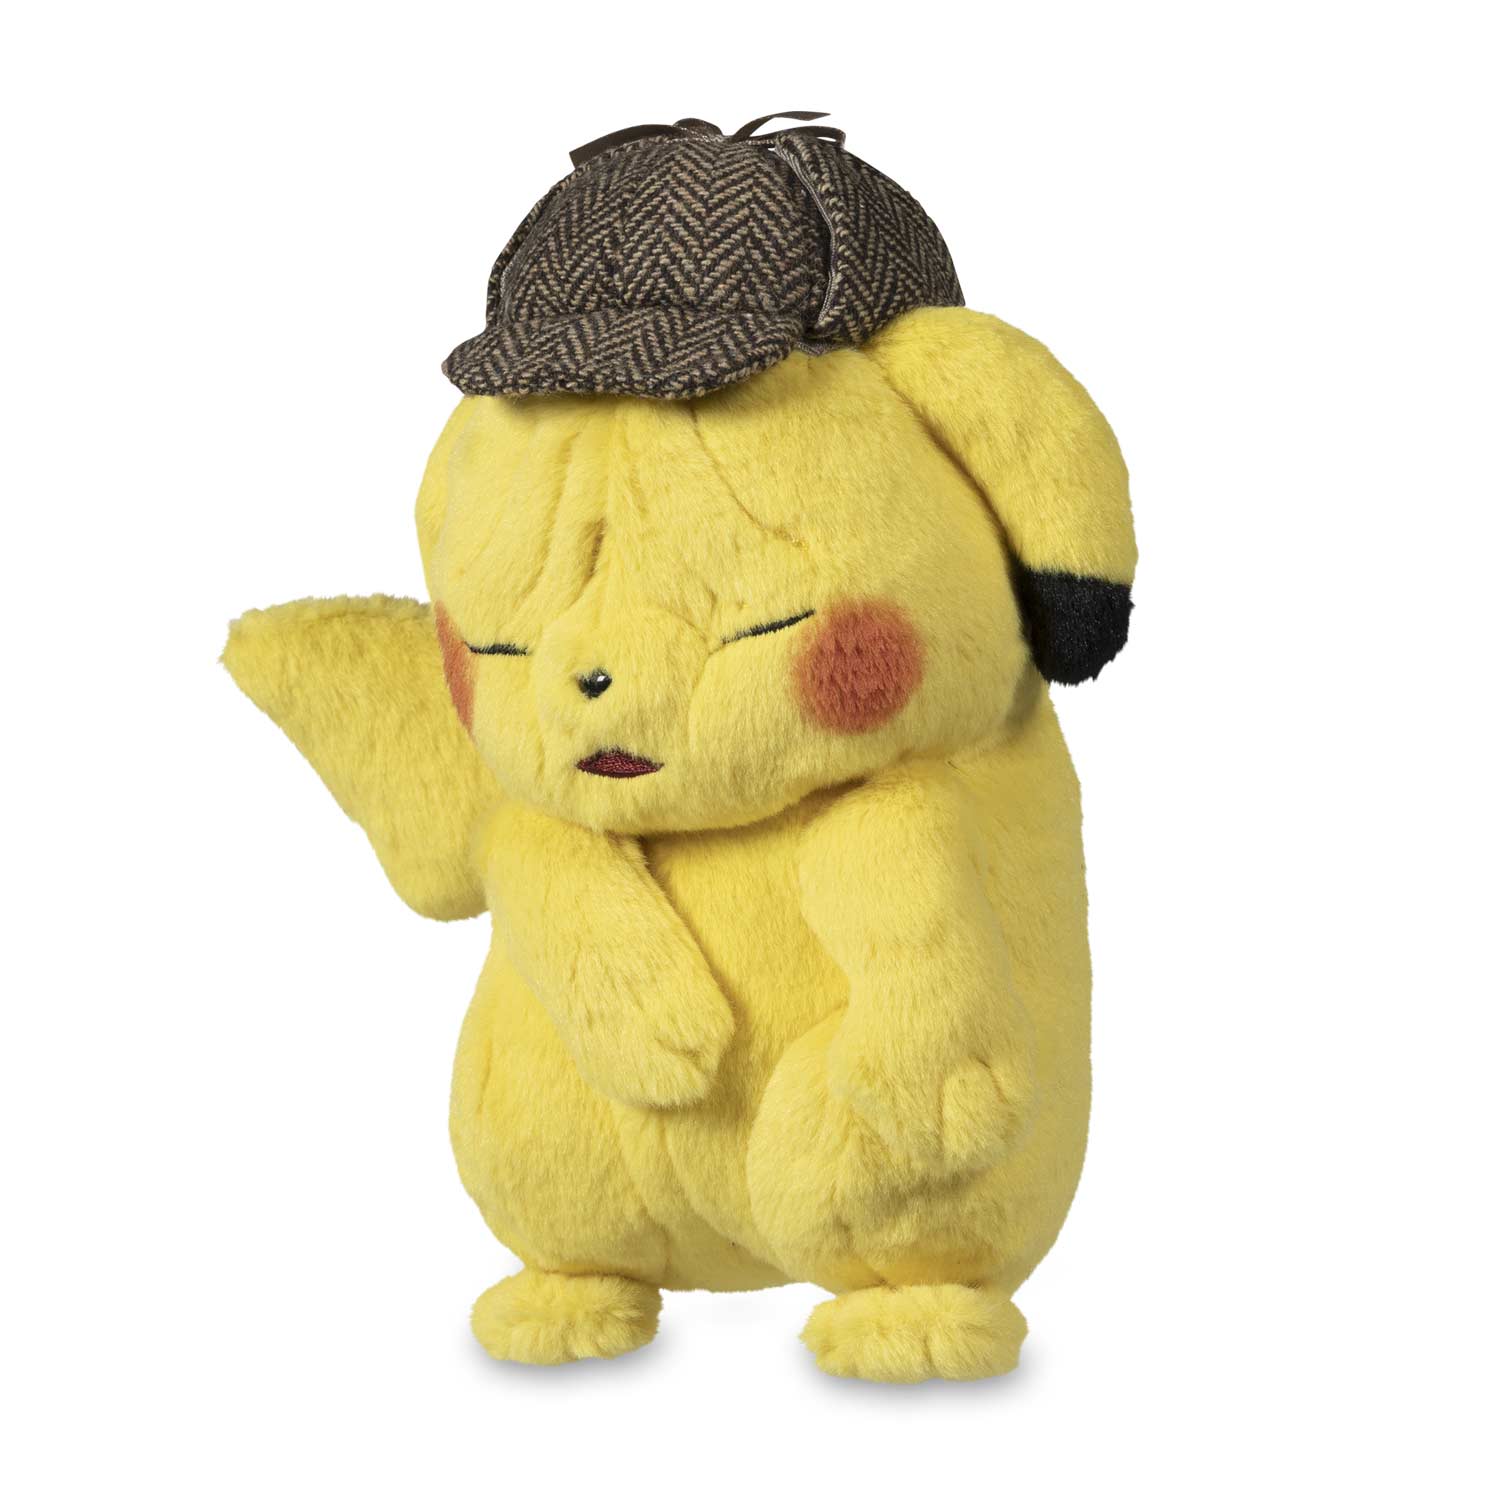 detective pikachu soft toy